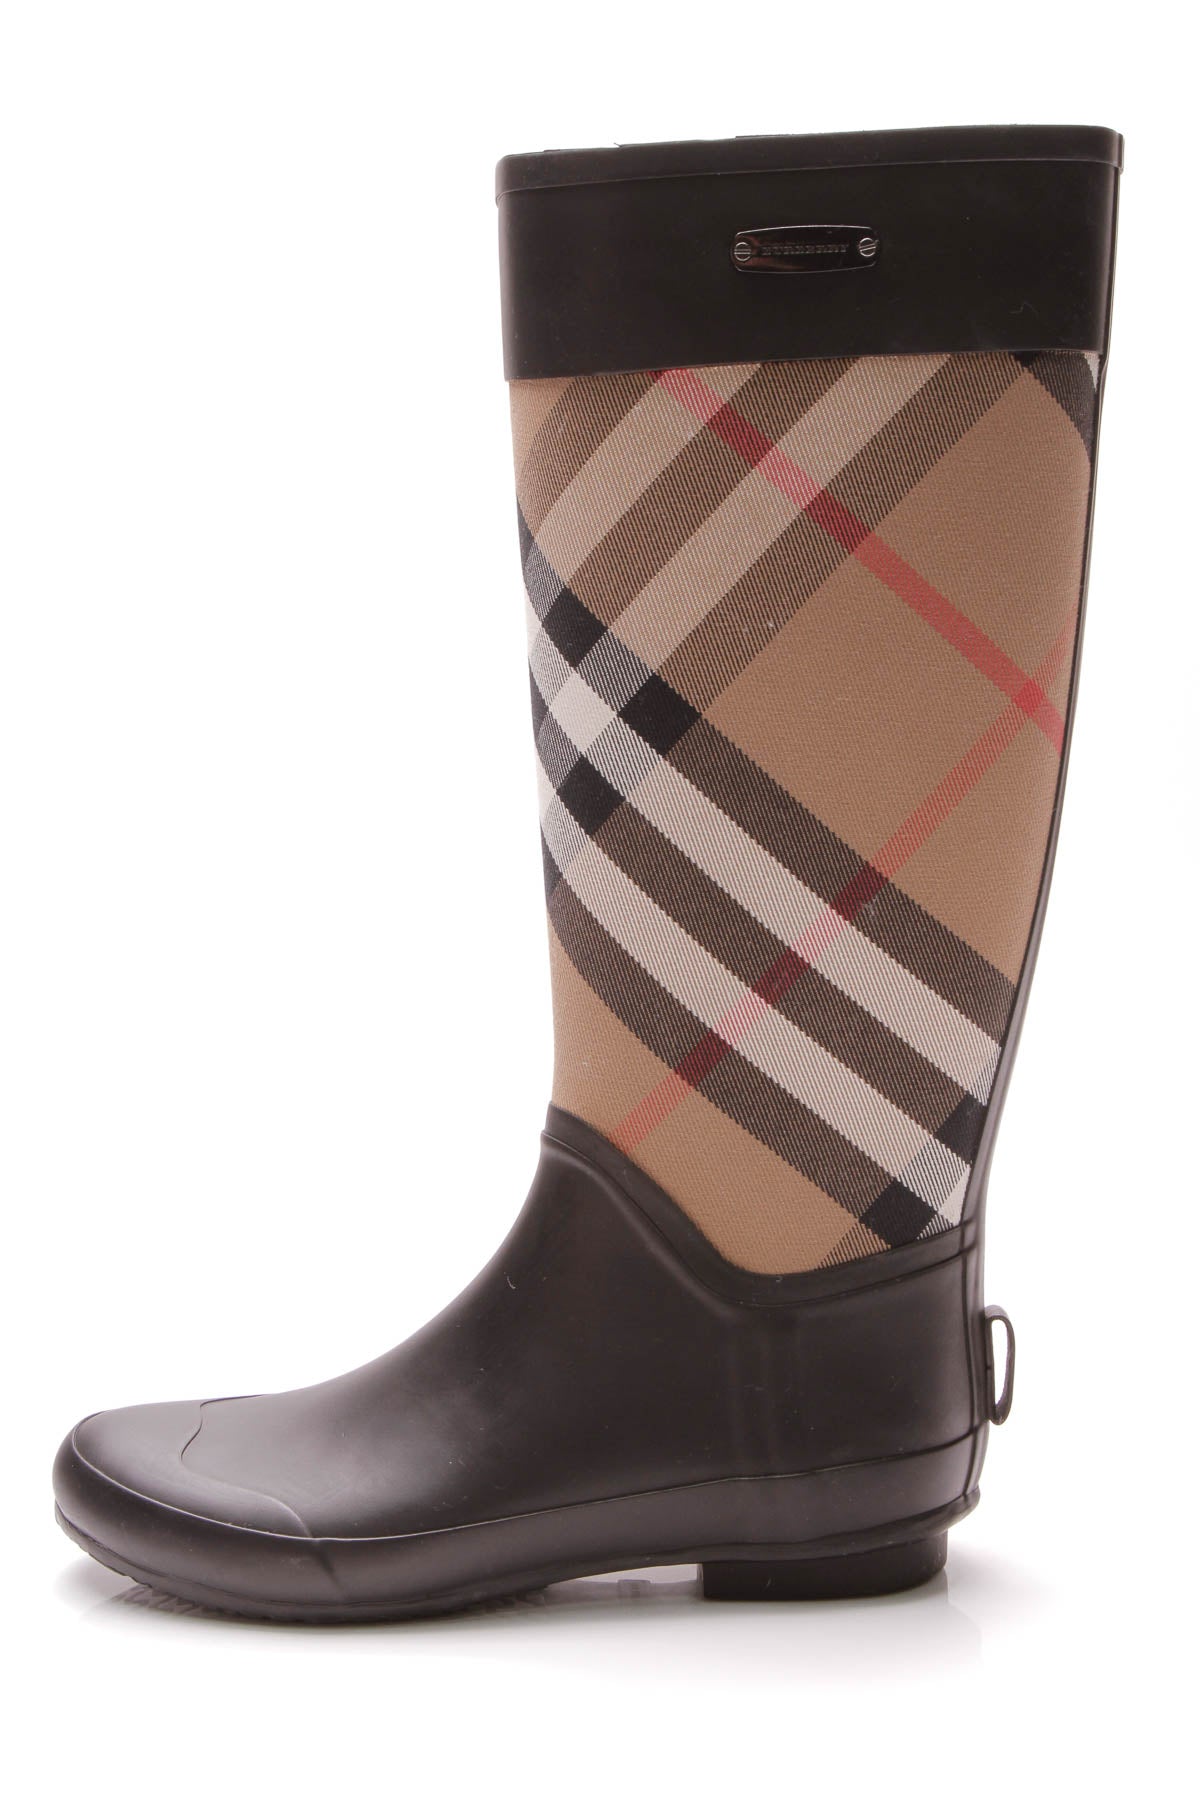 burberry clemence rain boots